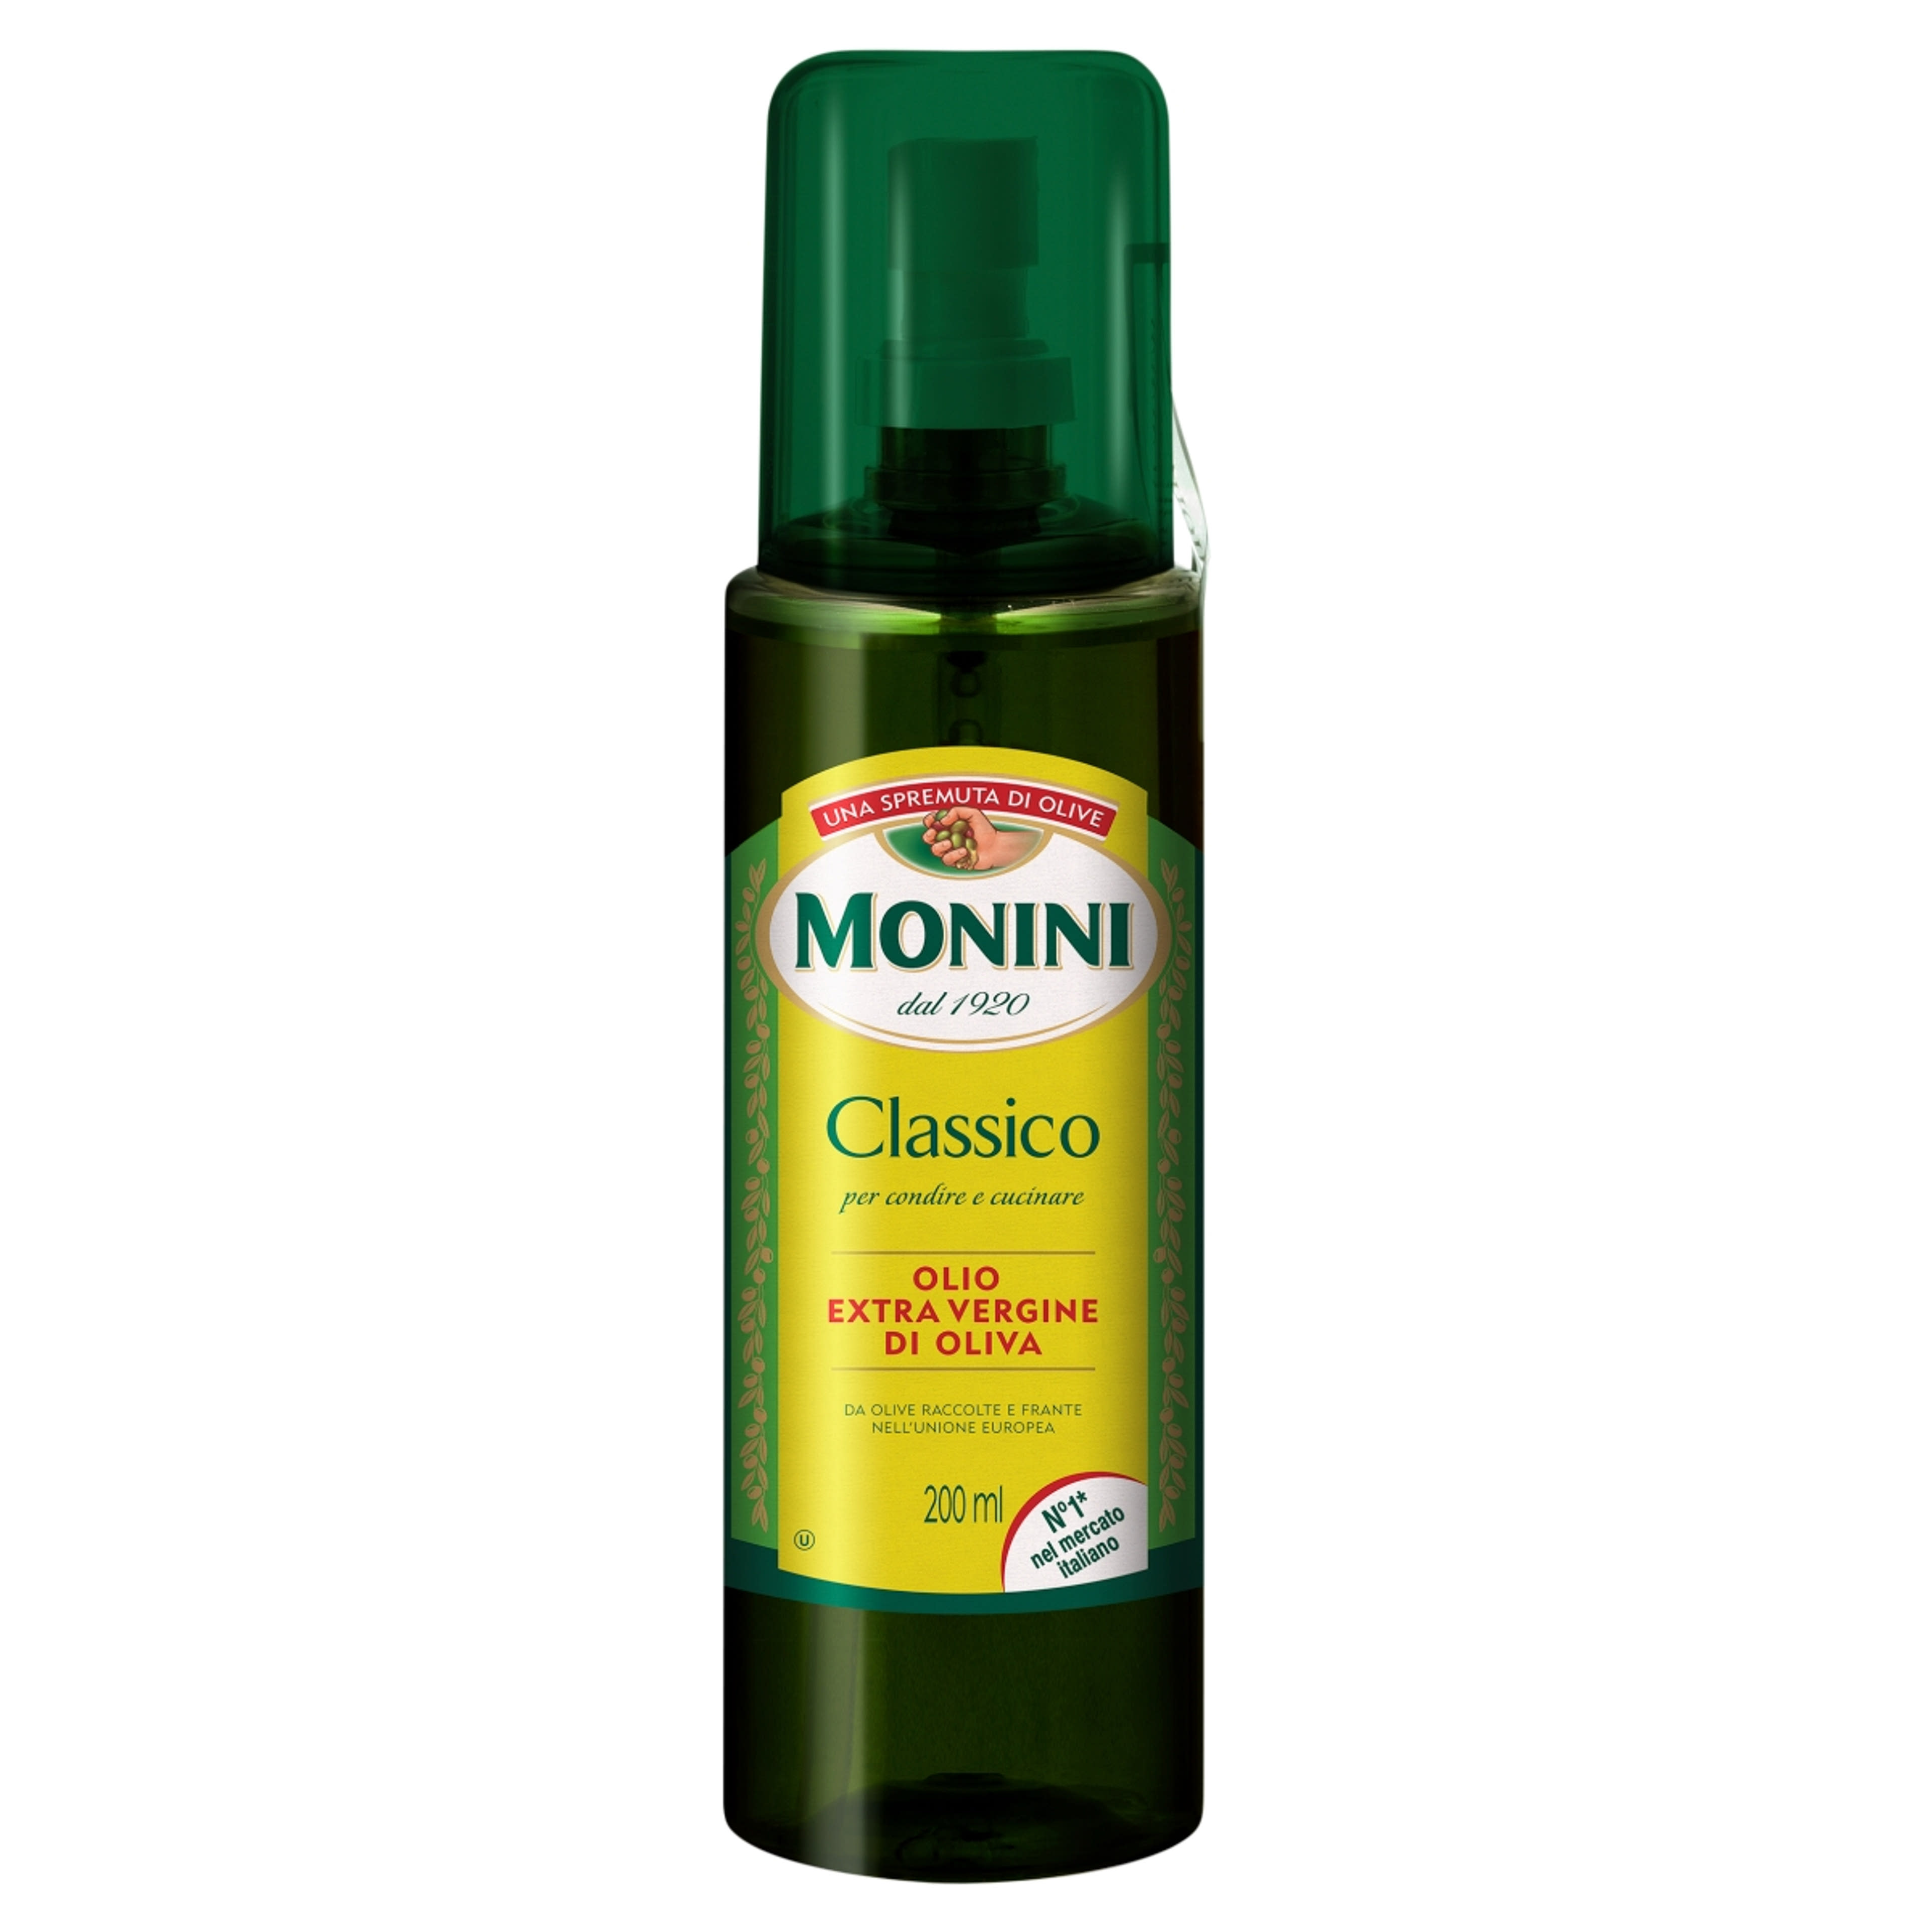 Monini classico extra szűz olivaolaj spray - 200 ml